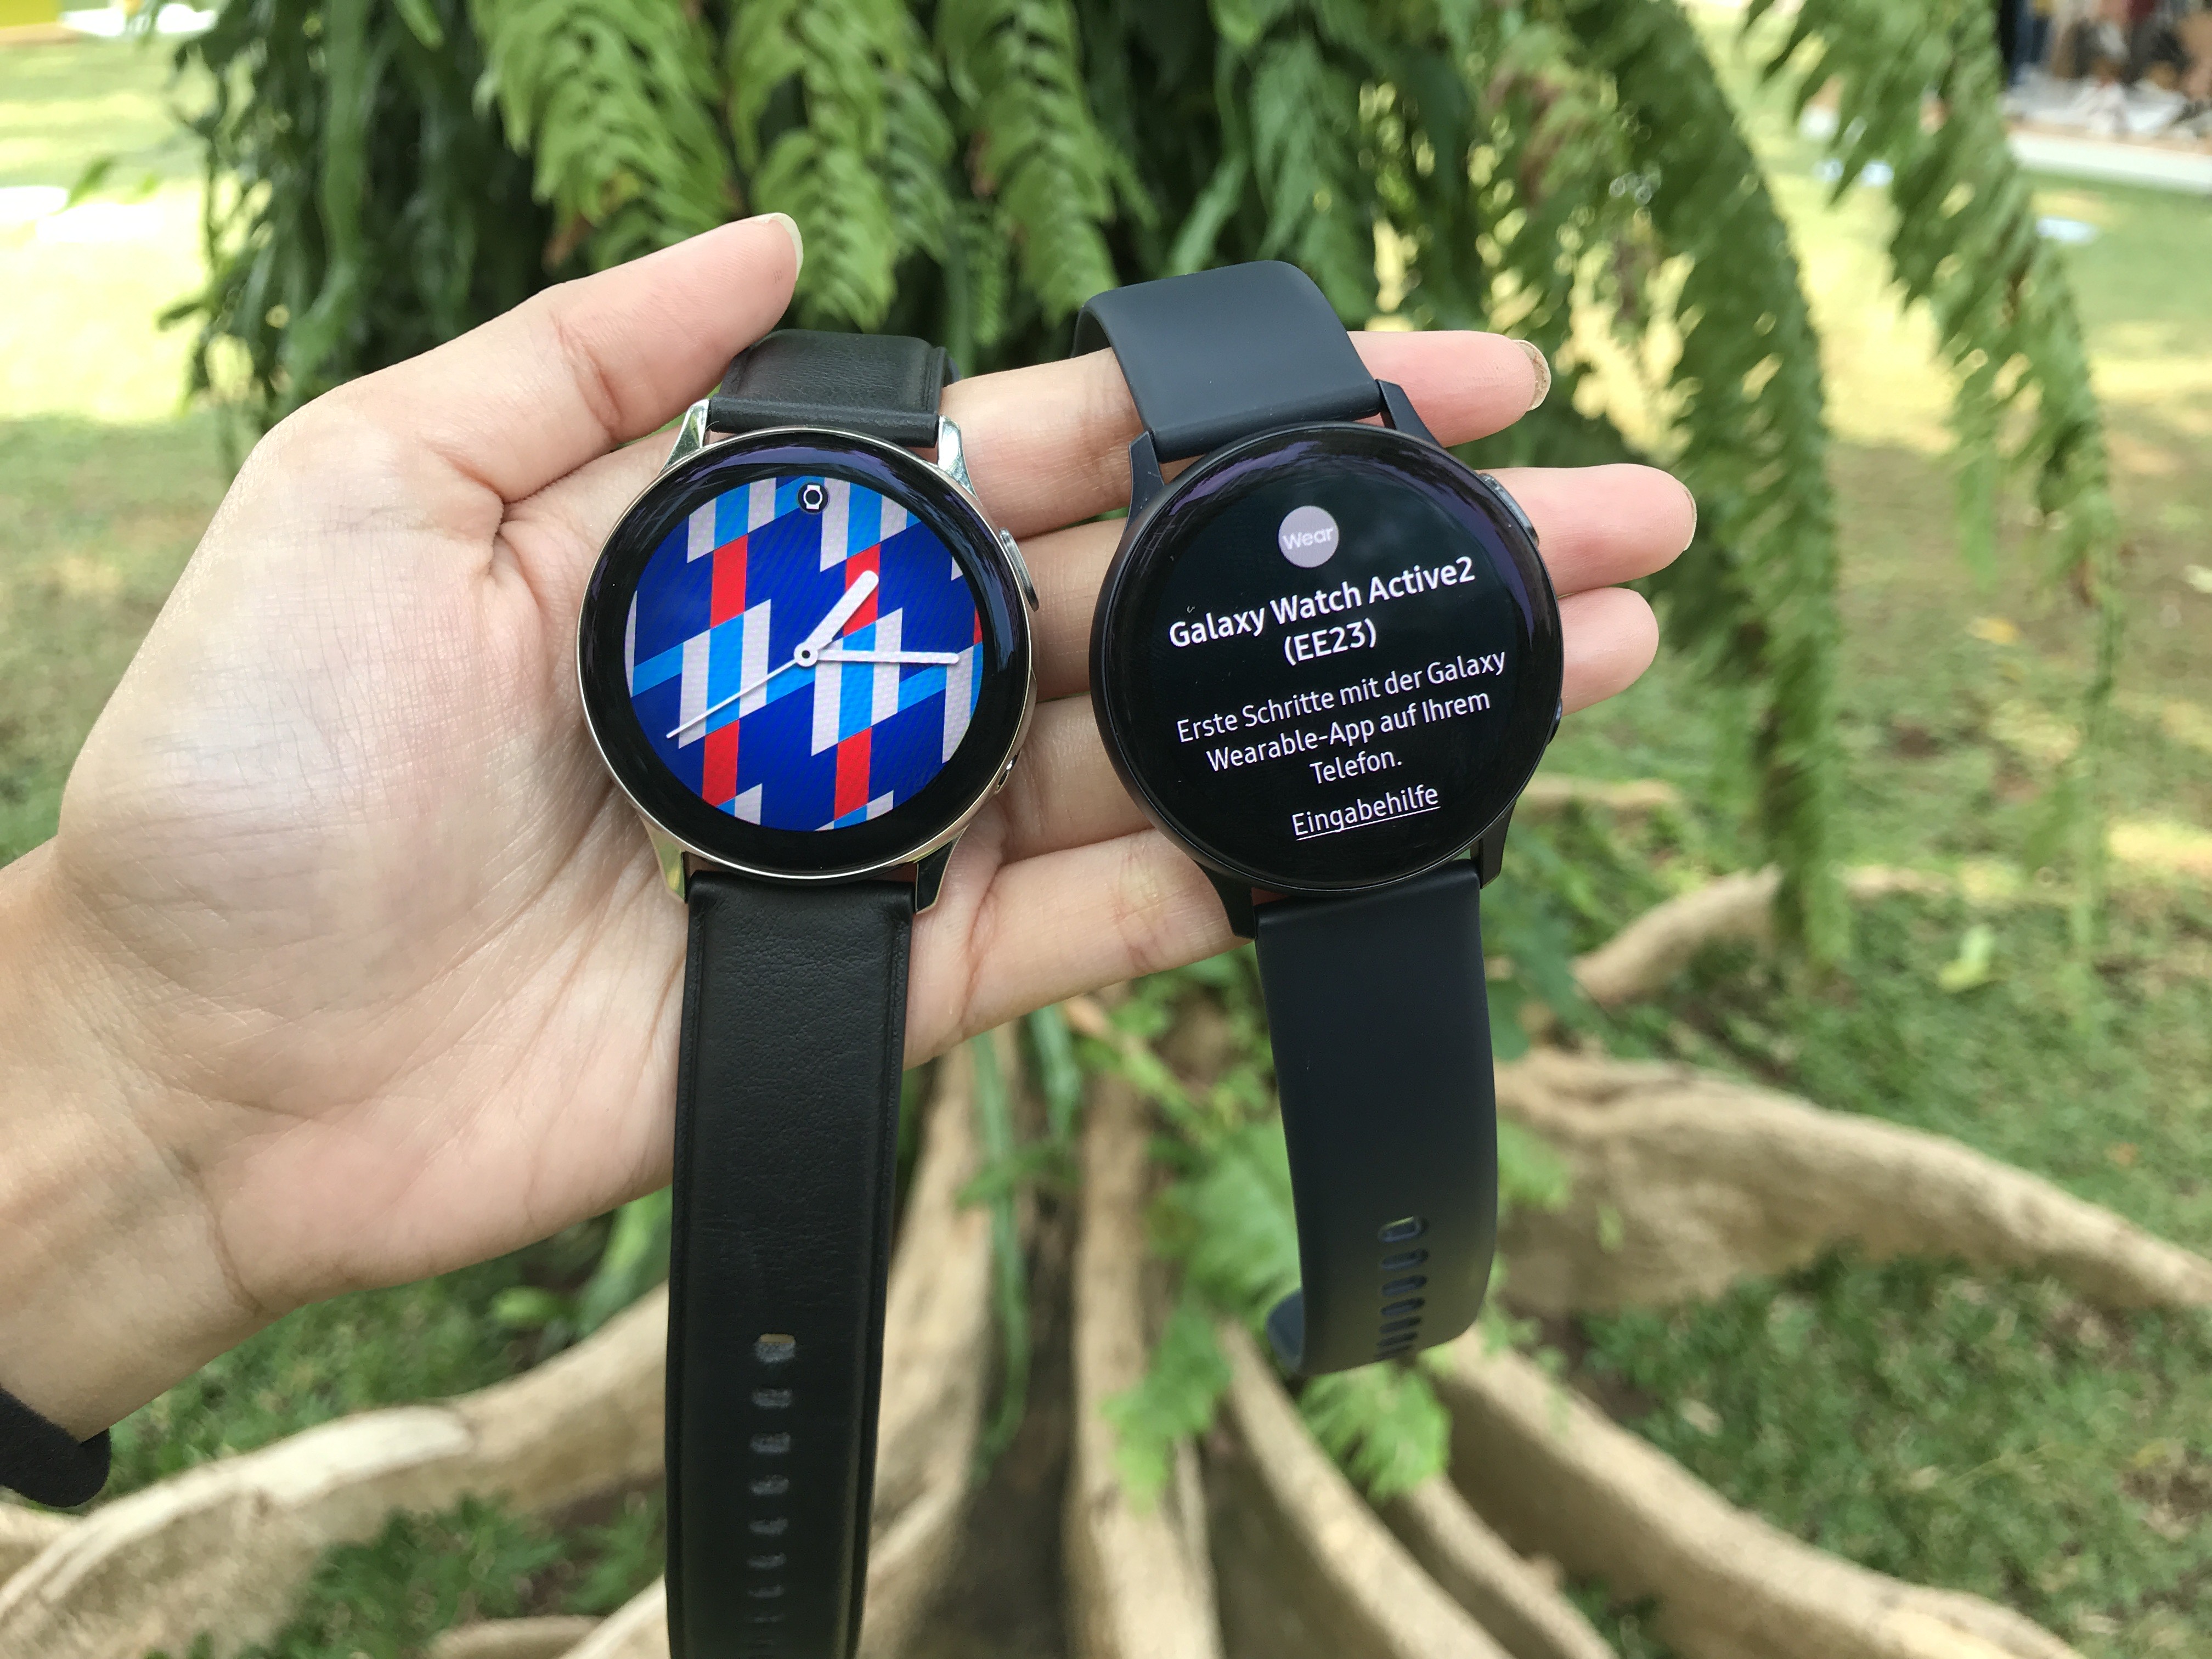 Jam Pintar Galaxy Watch Active2 Dirilis, Harganya Mulai Rp4 Jutaan